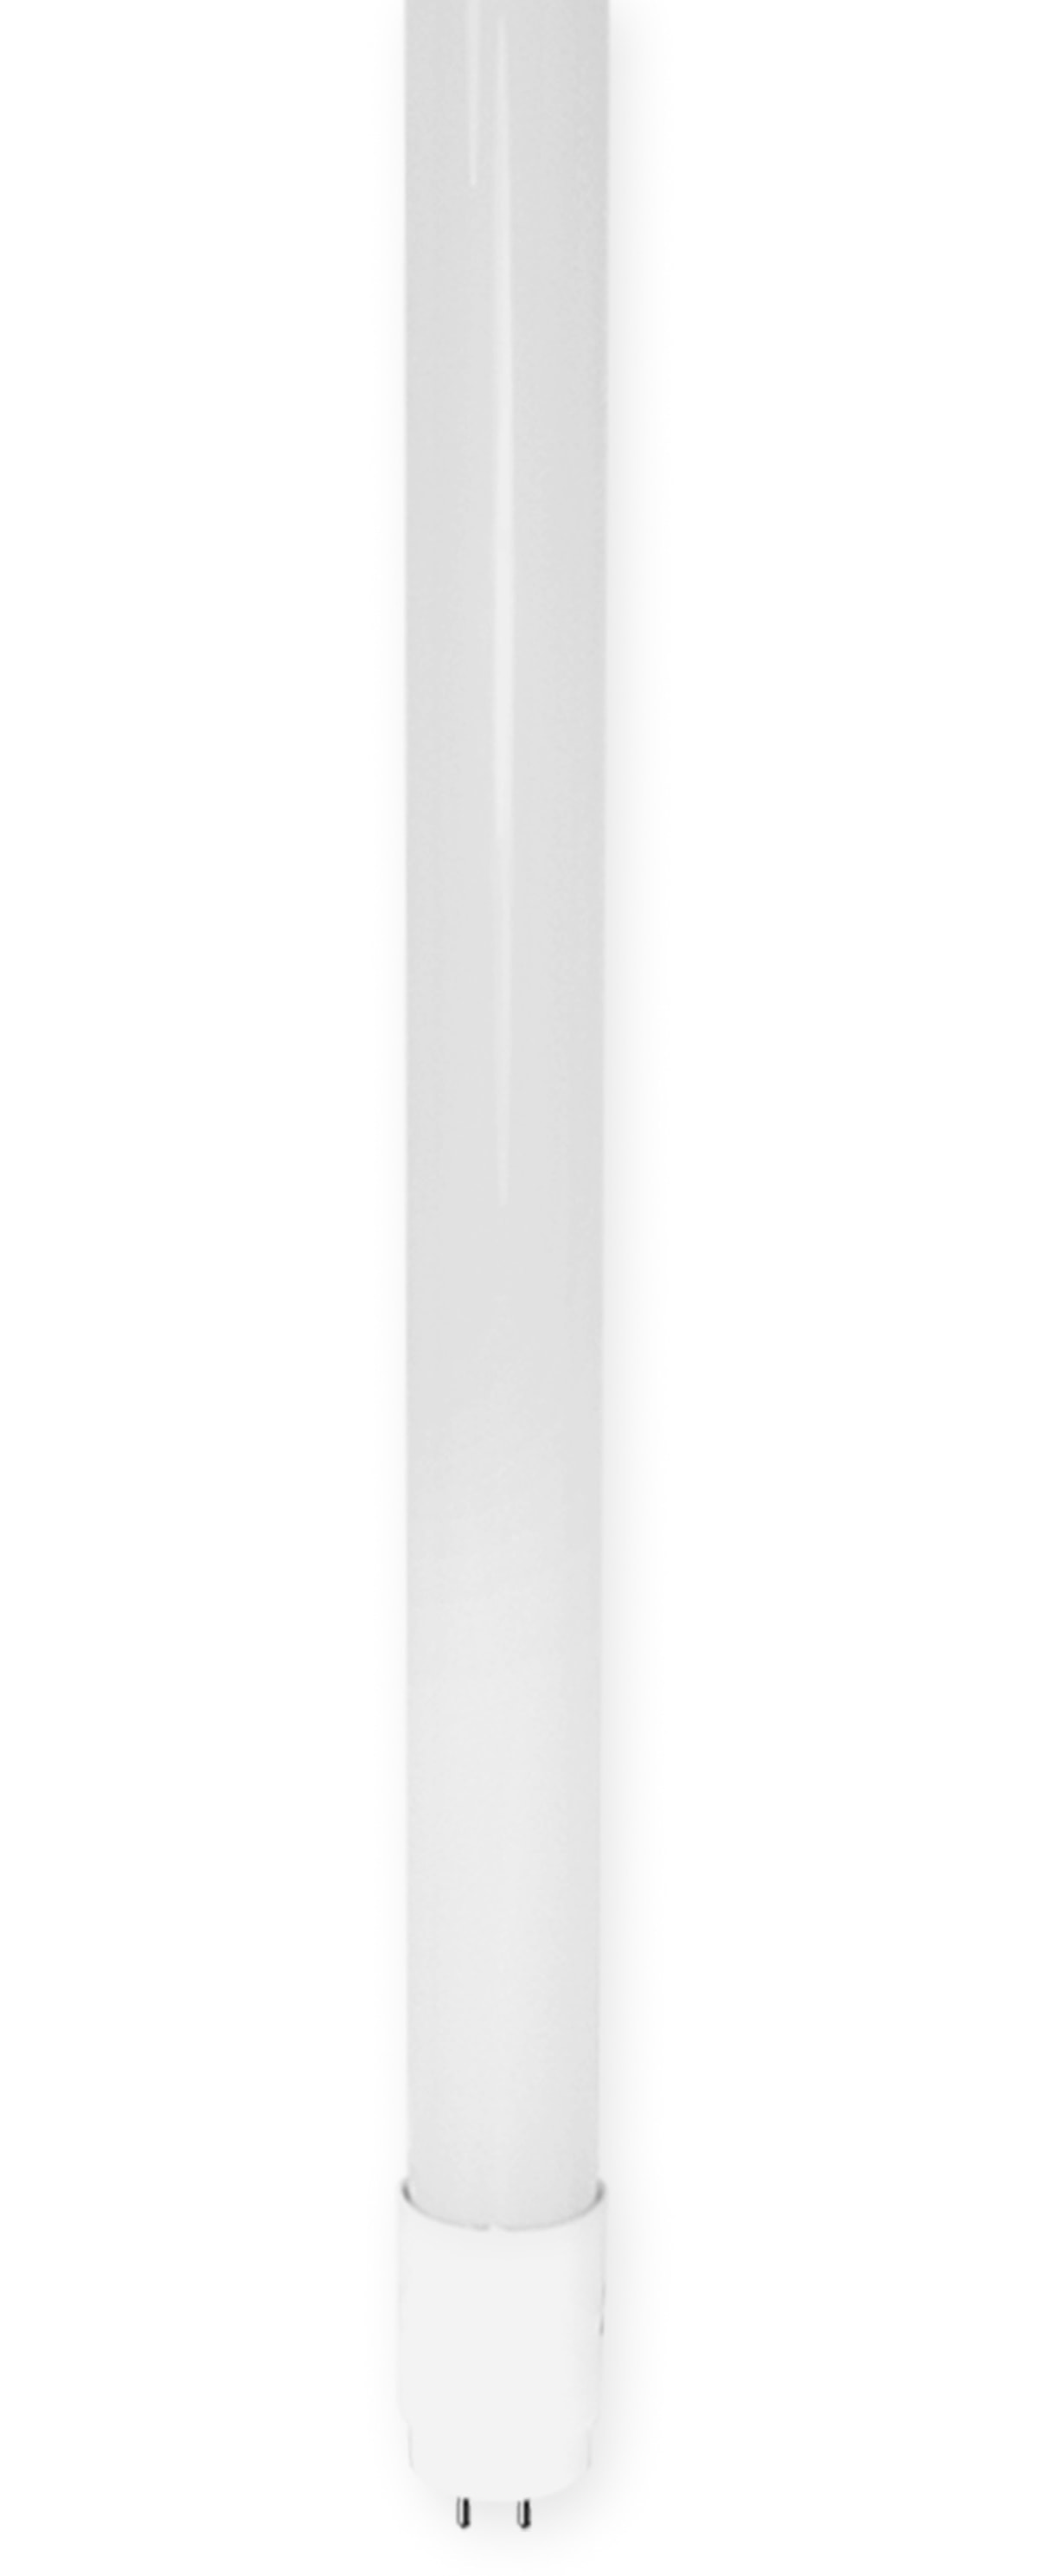 BLULAXA LED-Röhre 48365, EEK: F, 24 W, 2450 lm, G13, 4000 K, 150 cm